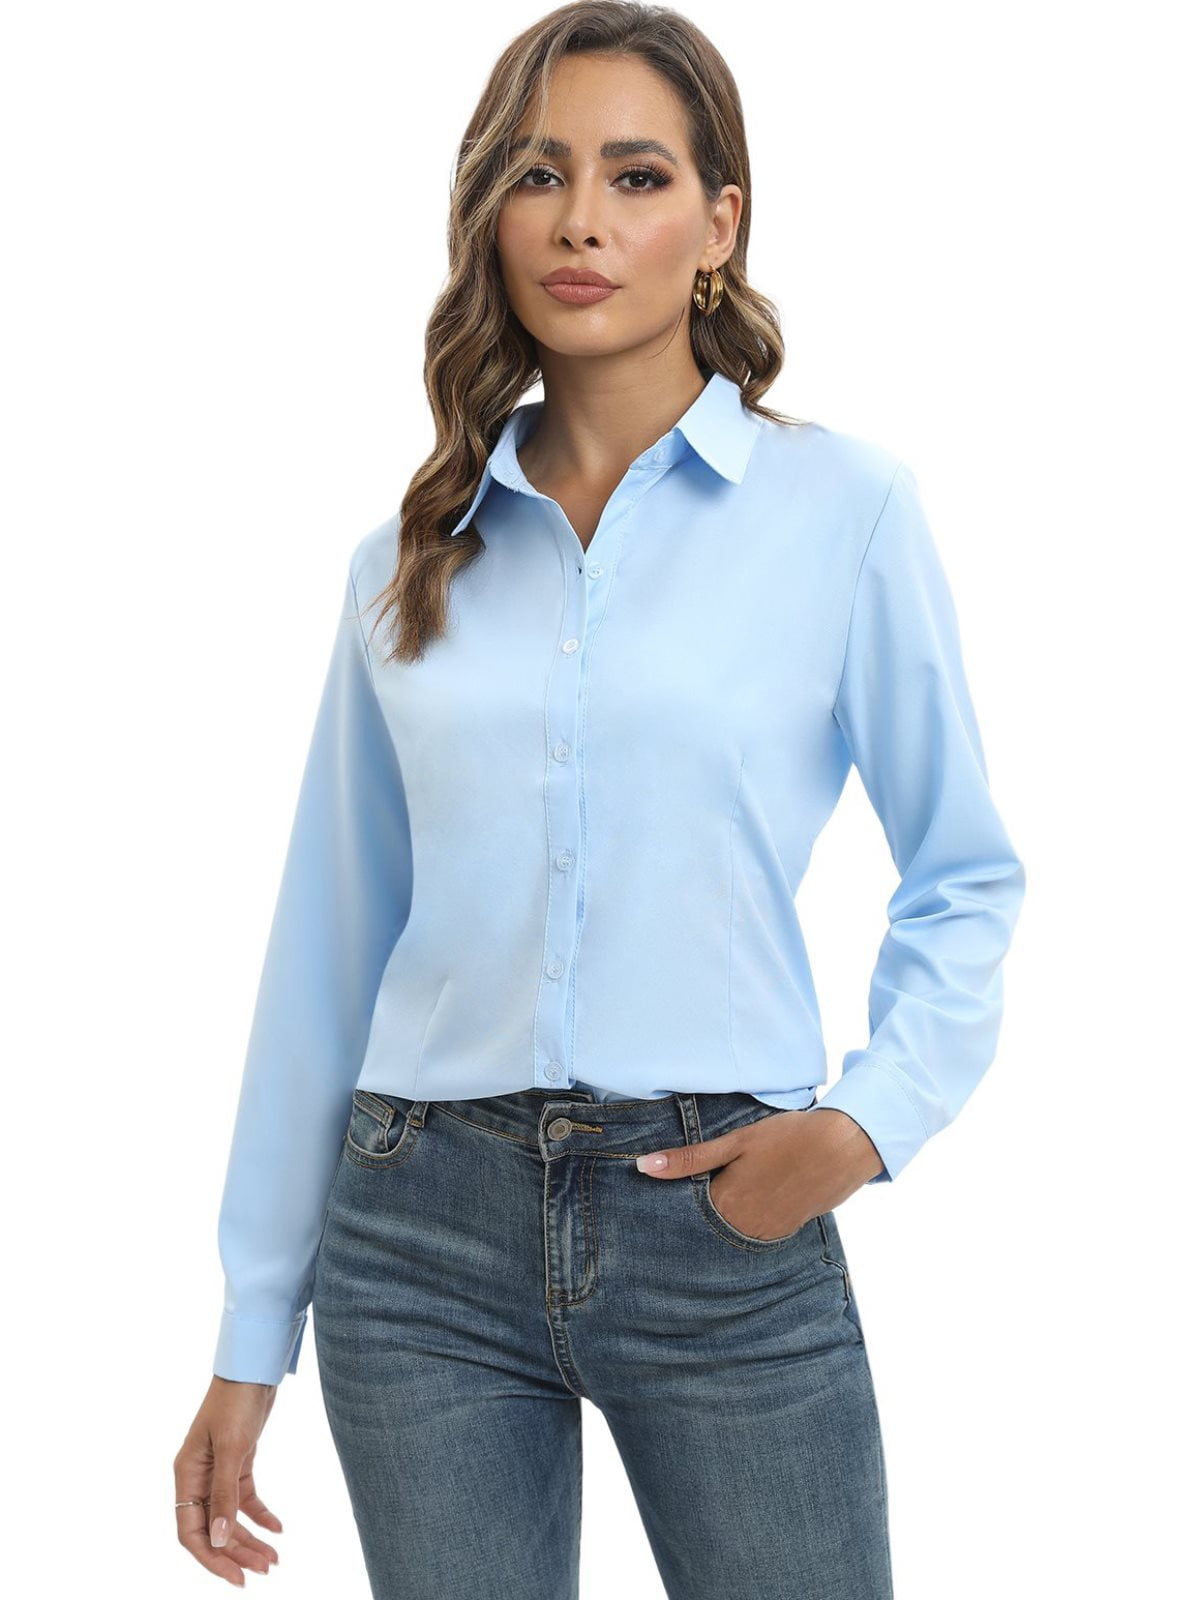 EFINNY Women's Button Down Shirts Long Sleeve Regular Fit Work Office  Blouse,S M L XXL 3XL 4XL 5XL (Plus Size),White Dress Shirts for Women Ladies